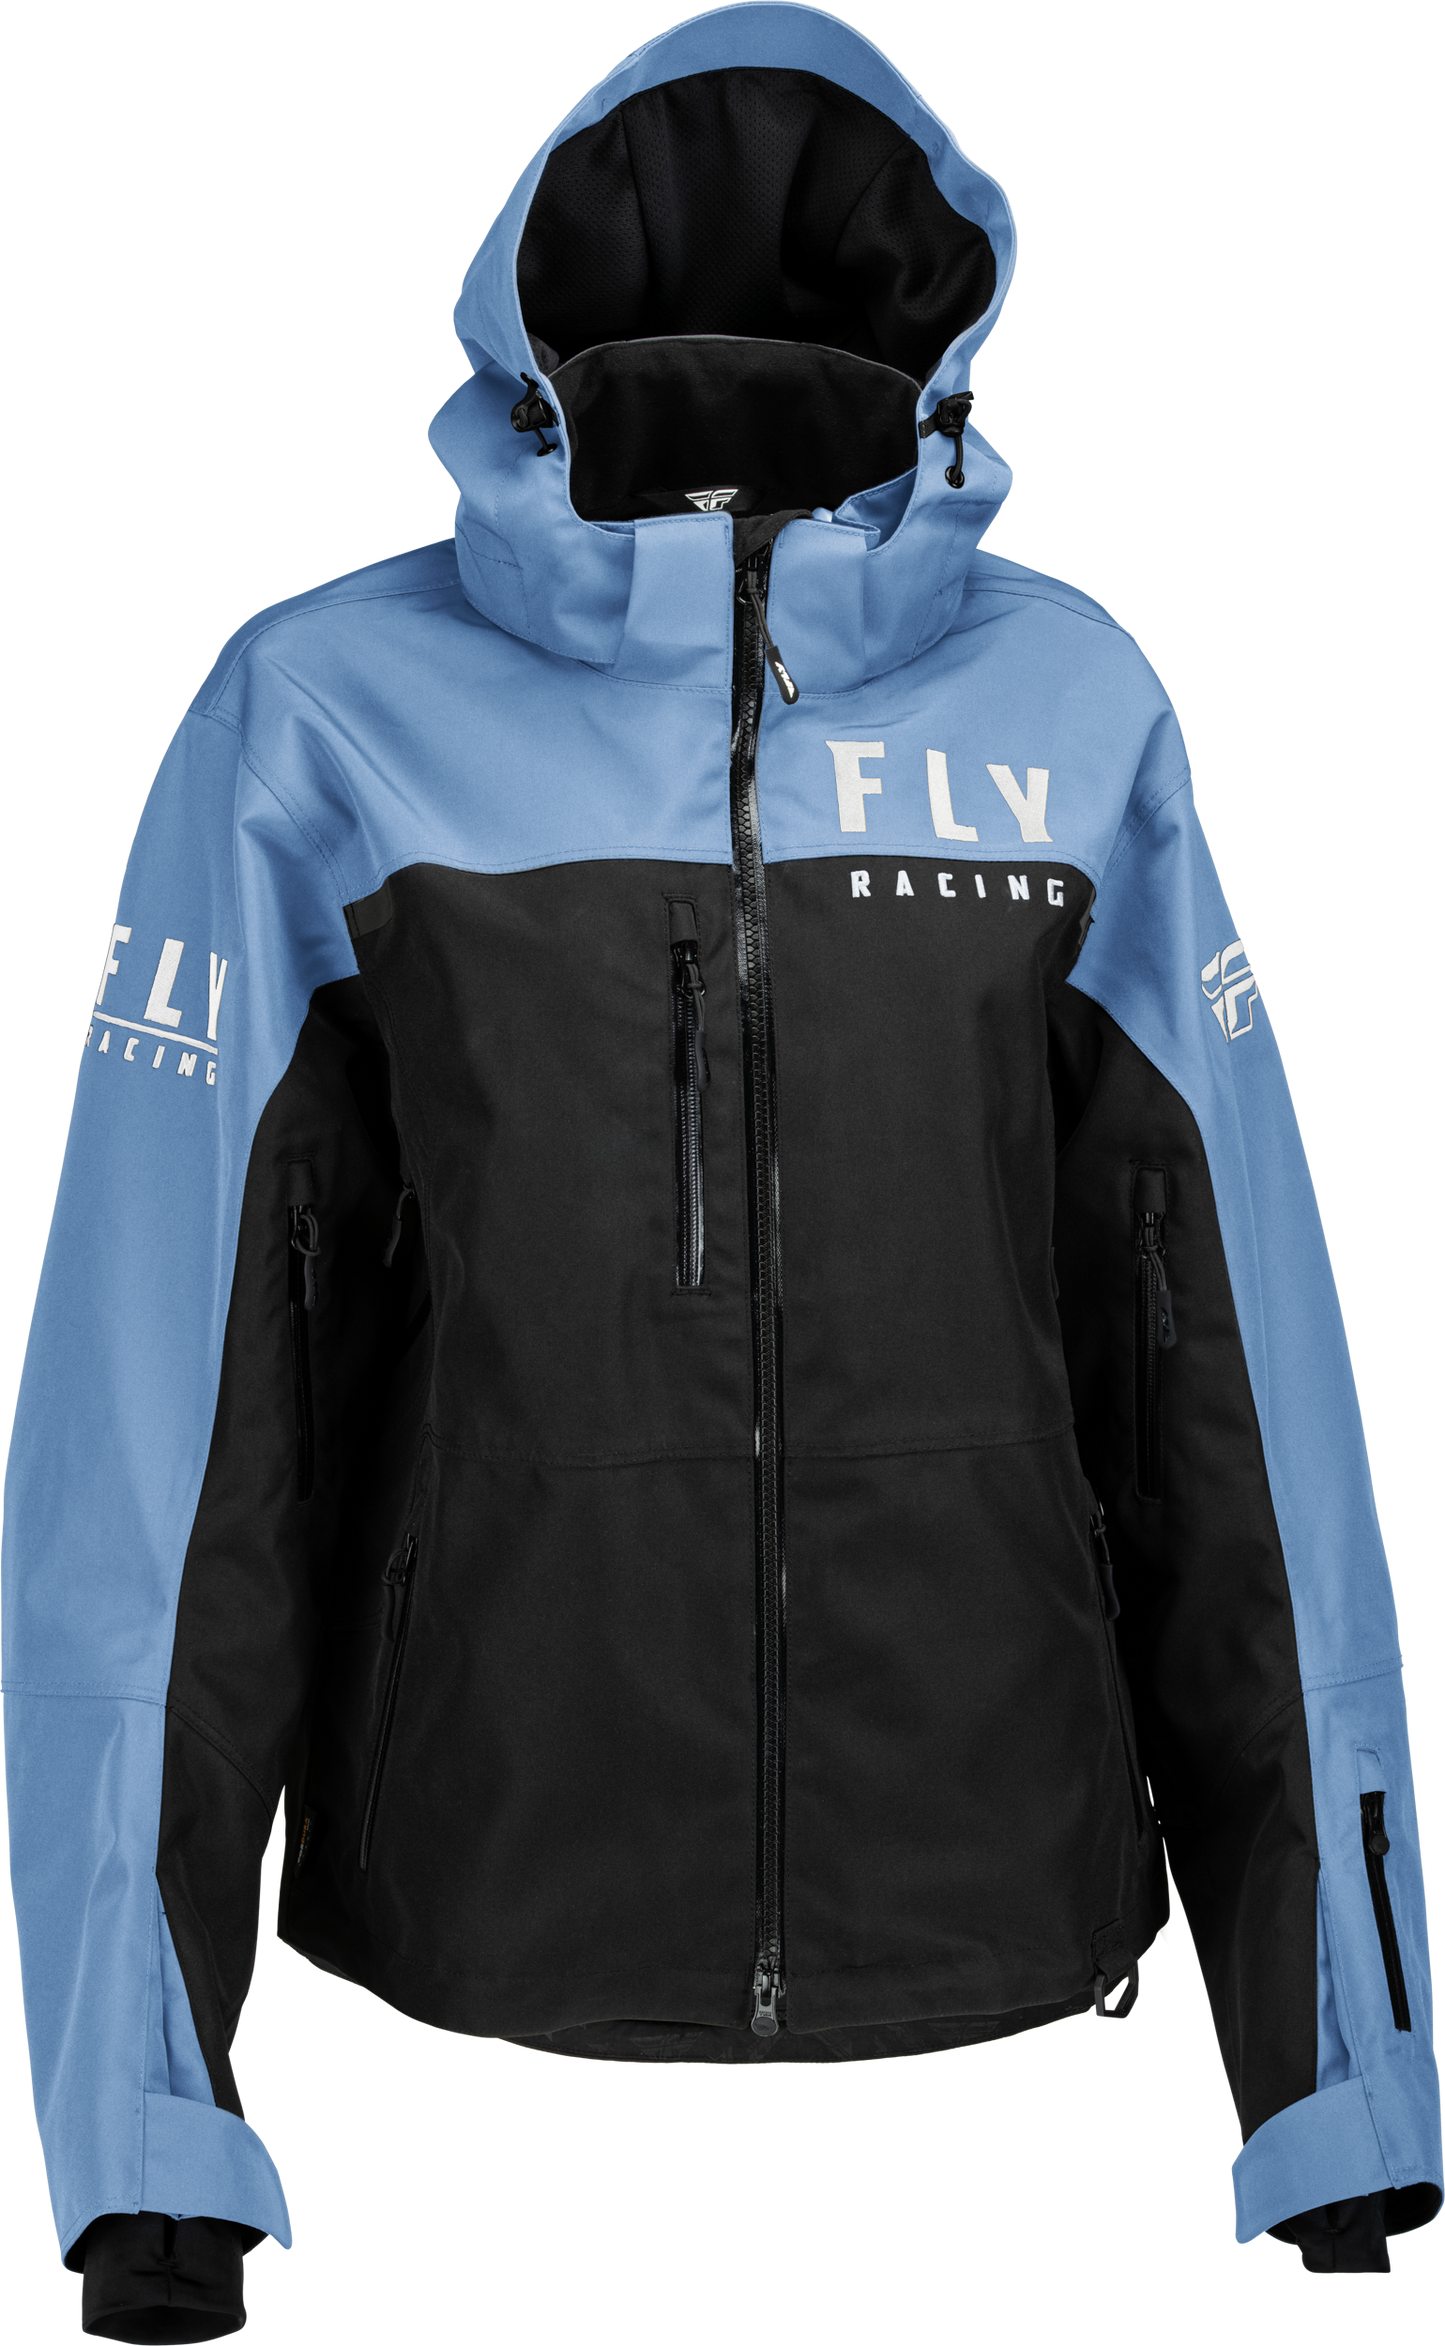 FLY RACING Women's Carbon Jacket Black/Blue Xs 470-4501XS